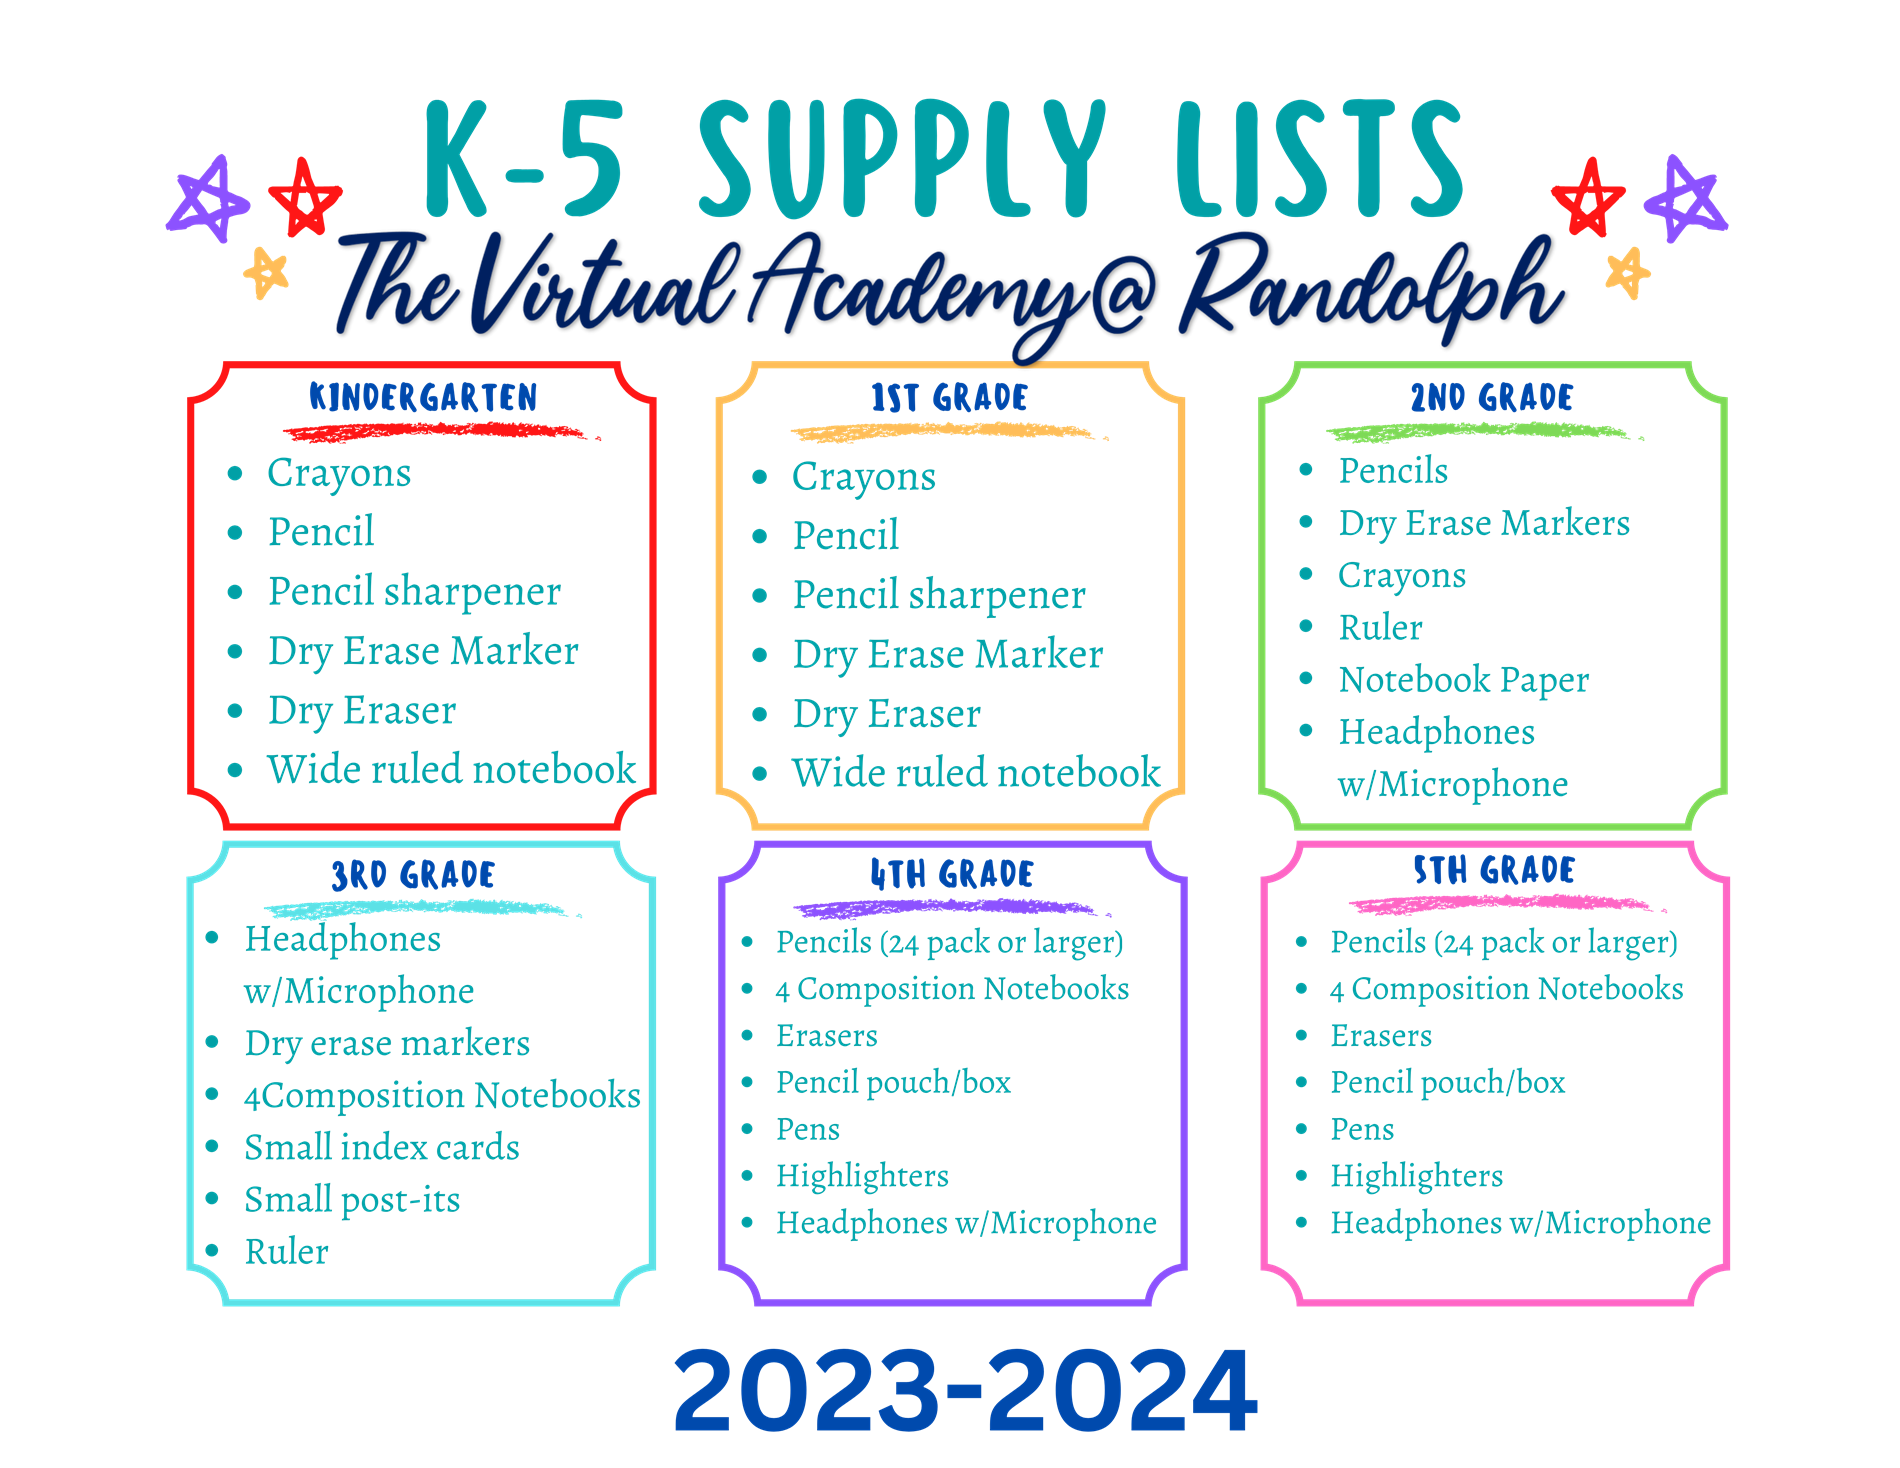 school-supply-lists